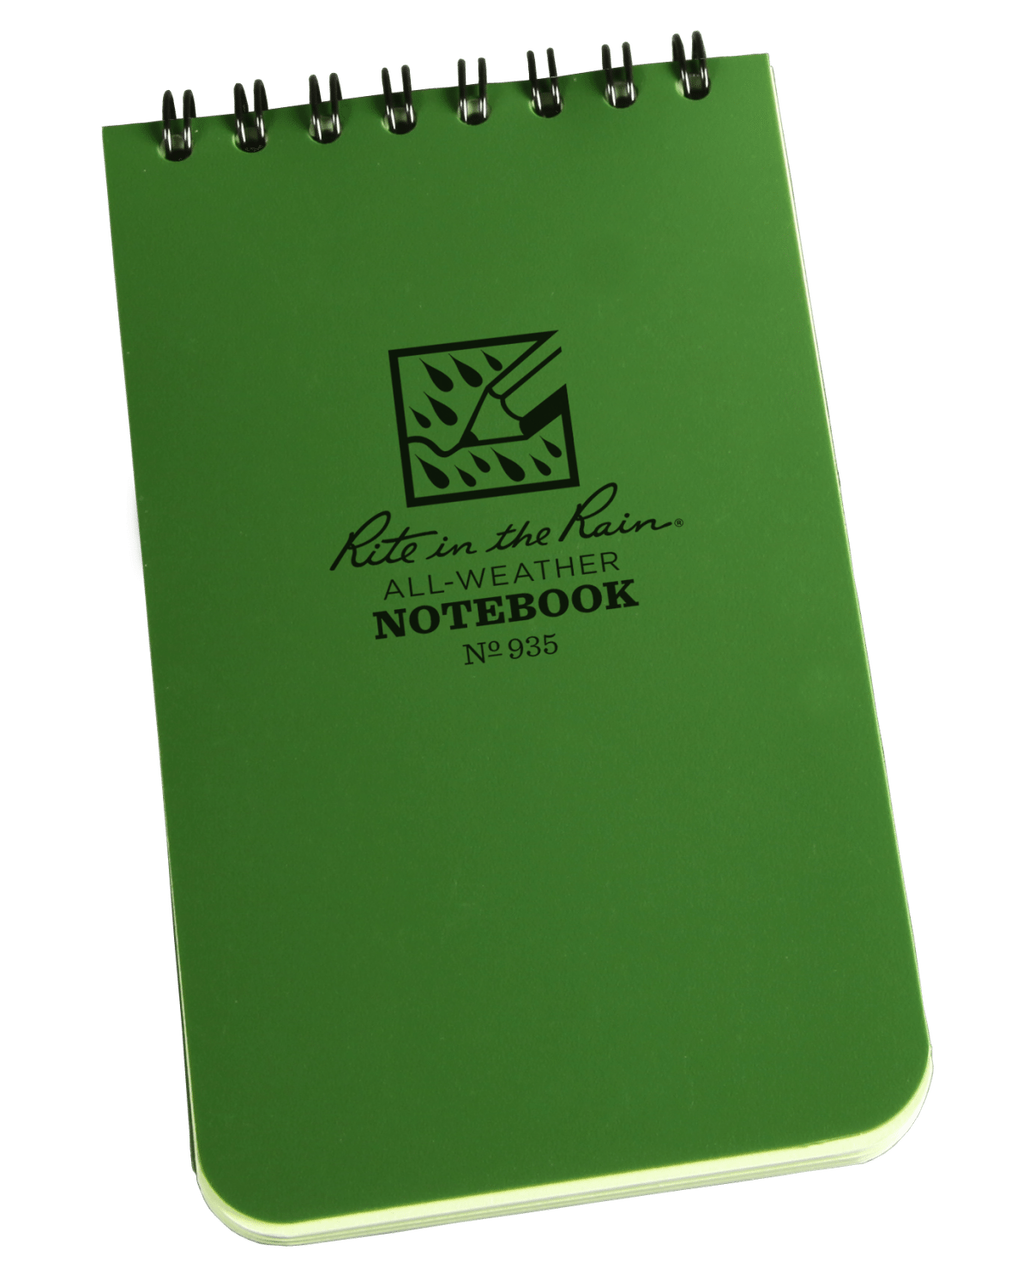 Green Notebook Transparent Images